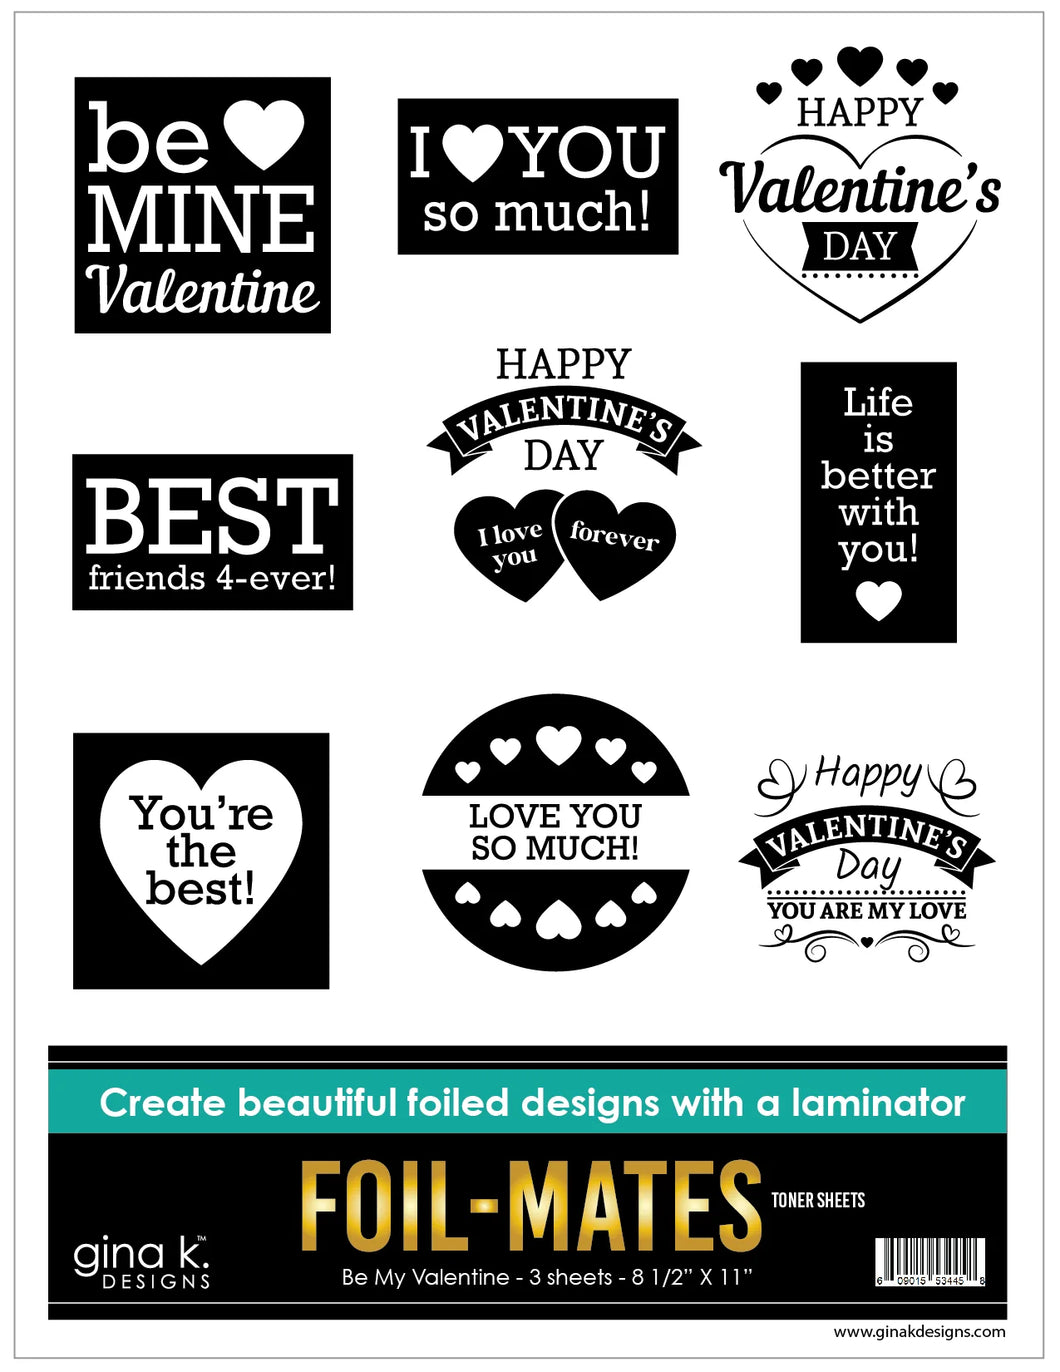 Gina K Designs - Foil-Mates Toner Sheets - Be My Valentine